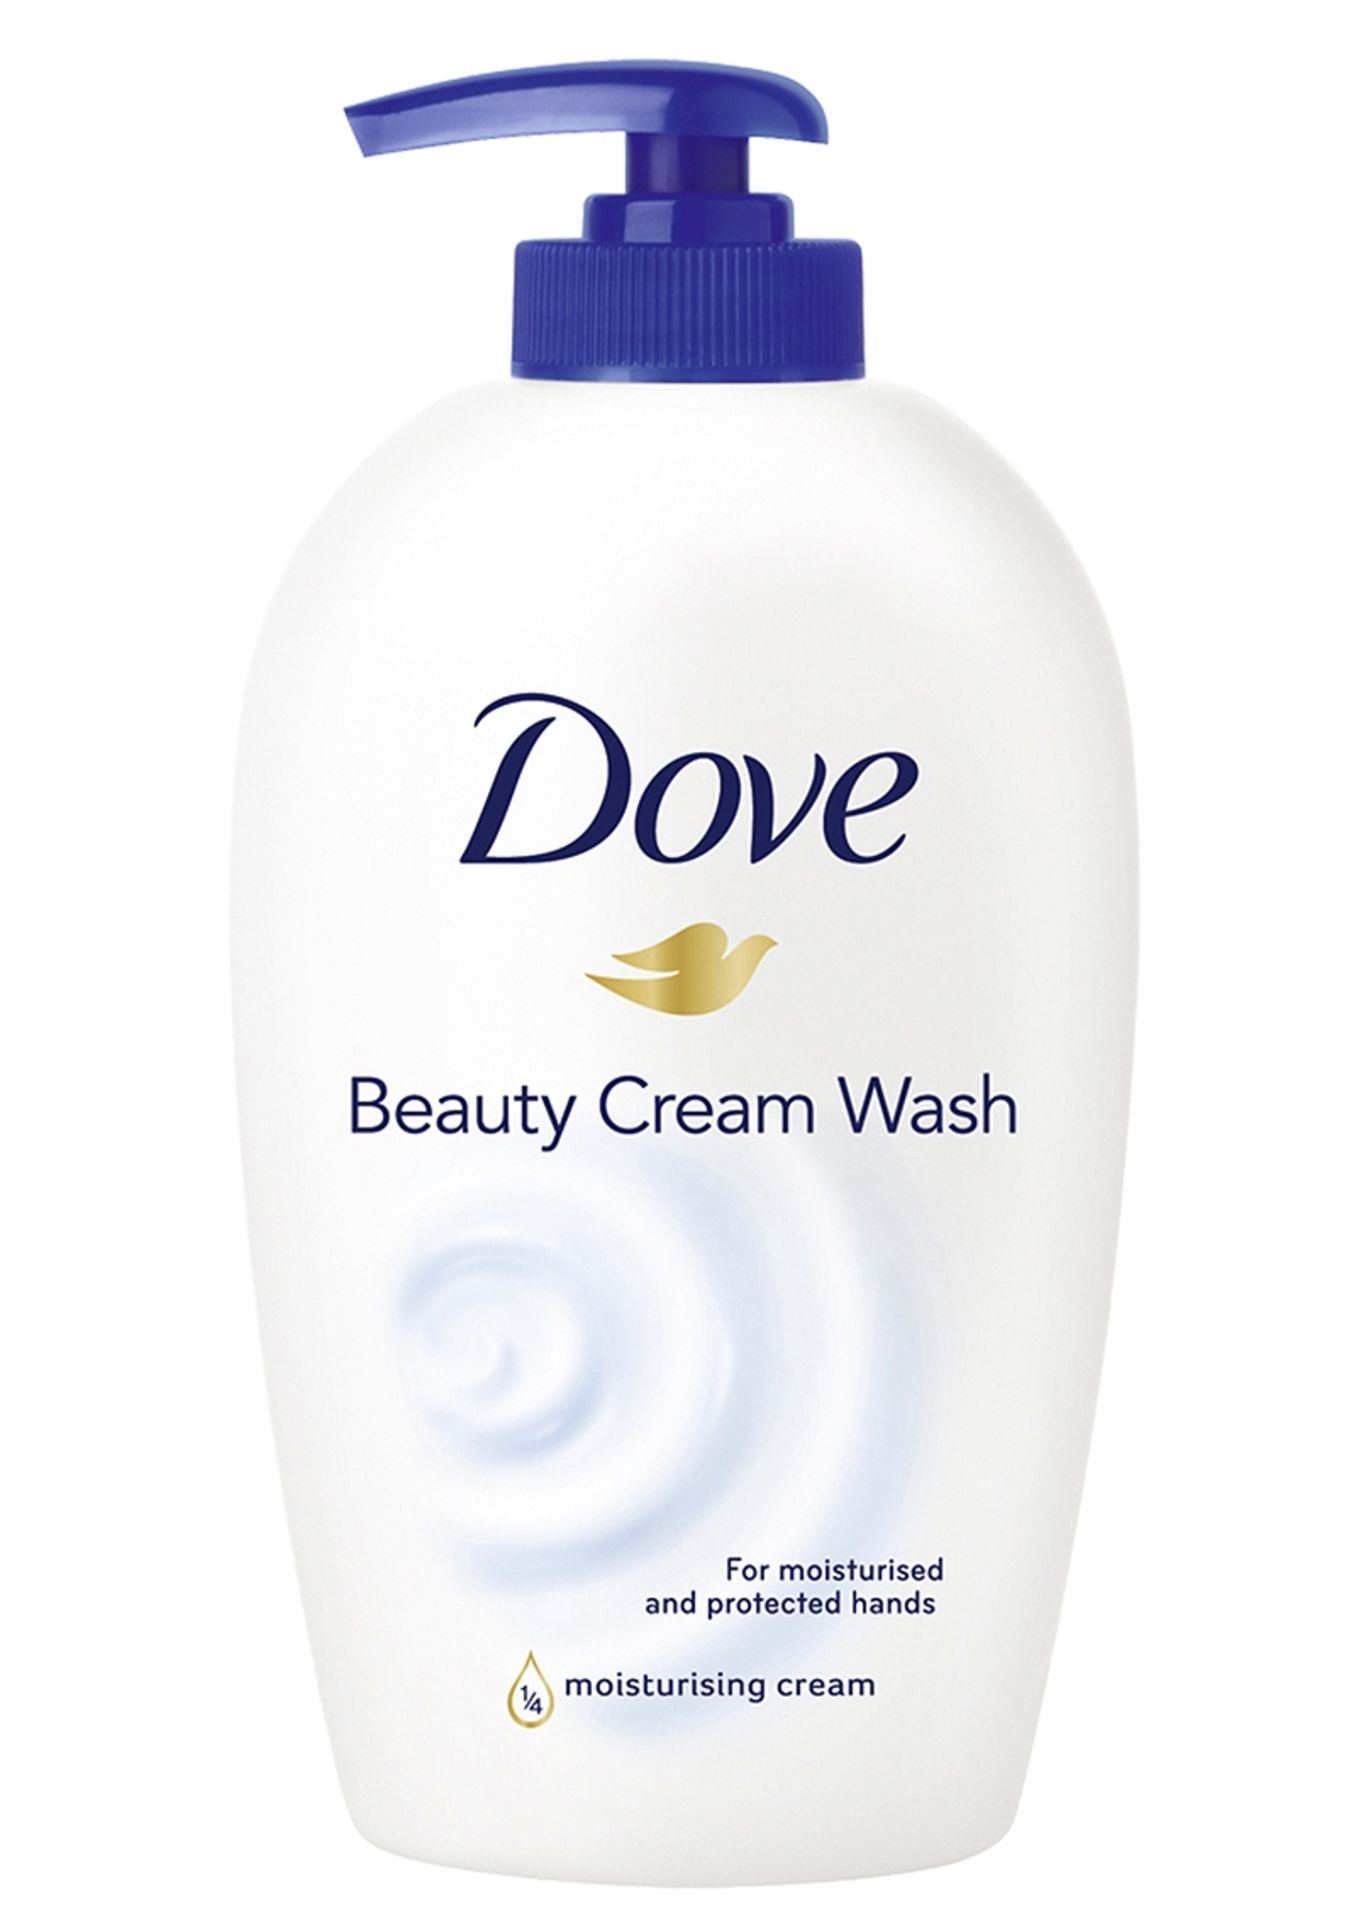 V Brand New Six Pump Bottles Of Dove Moisturising Beauty Cream Wash 250ml Total SRP£12.00 X 2 Bid